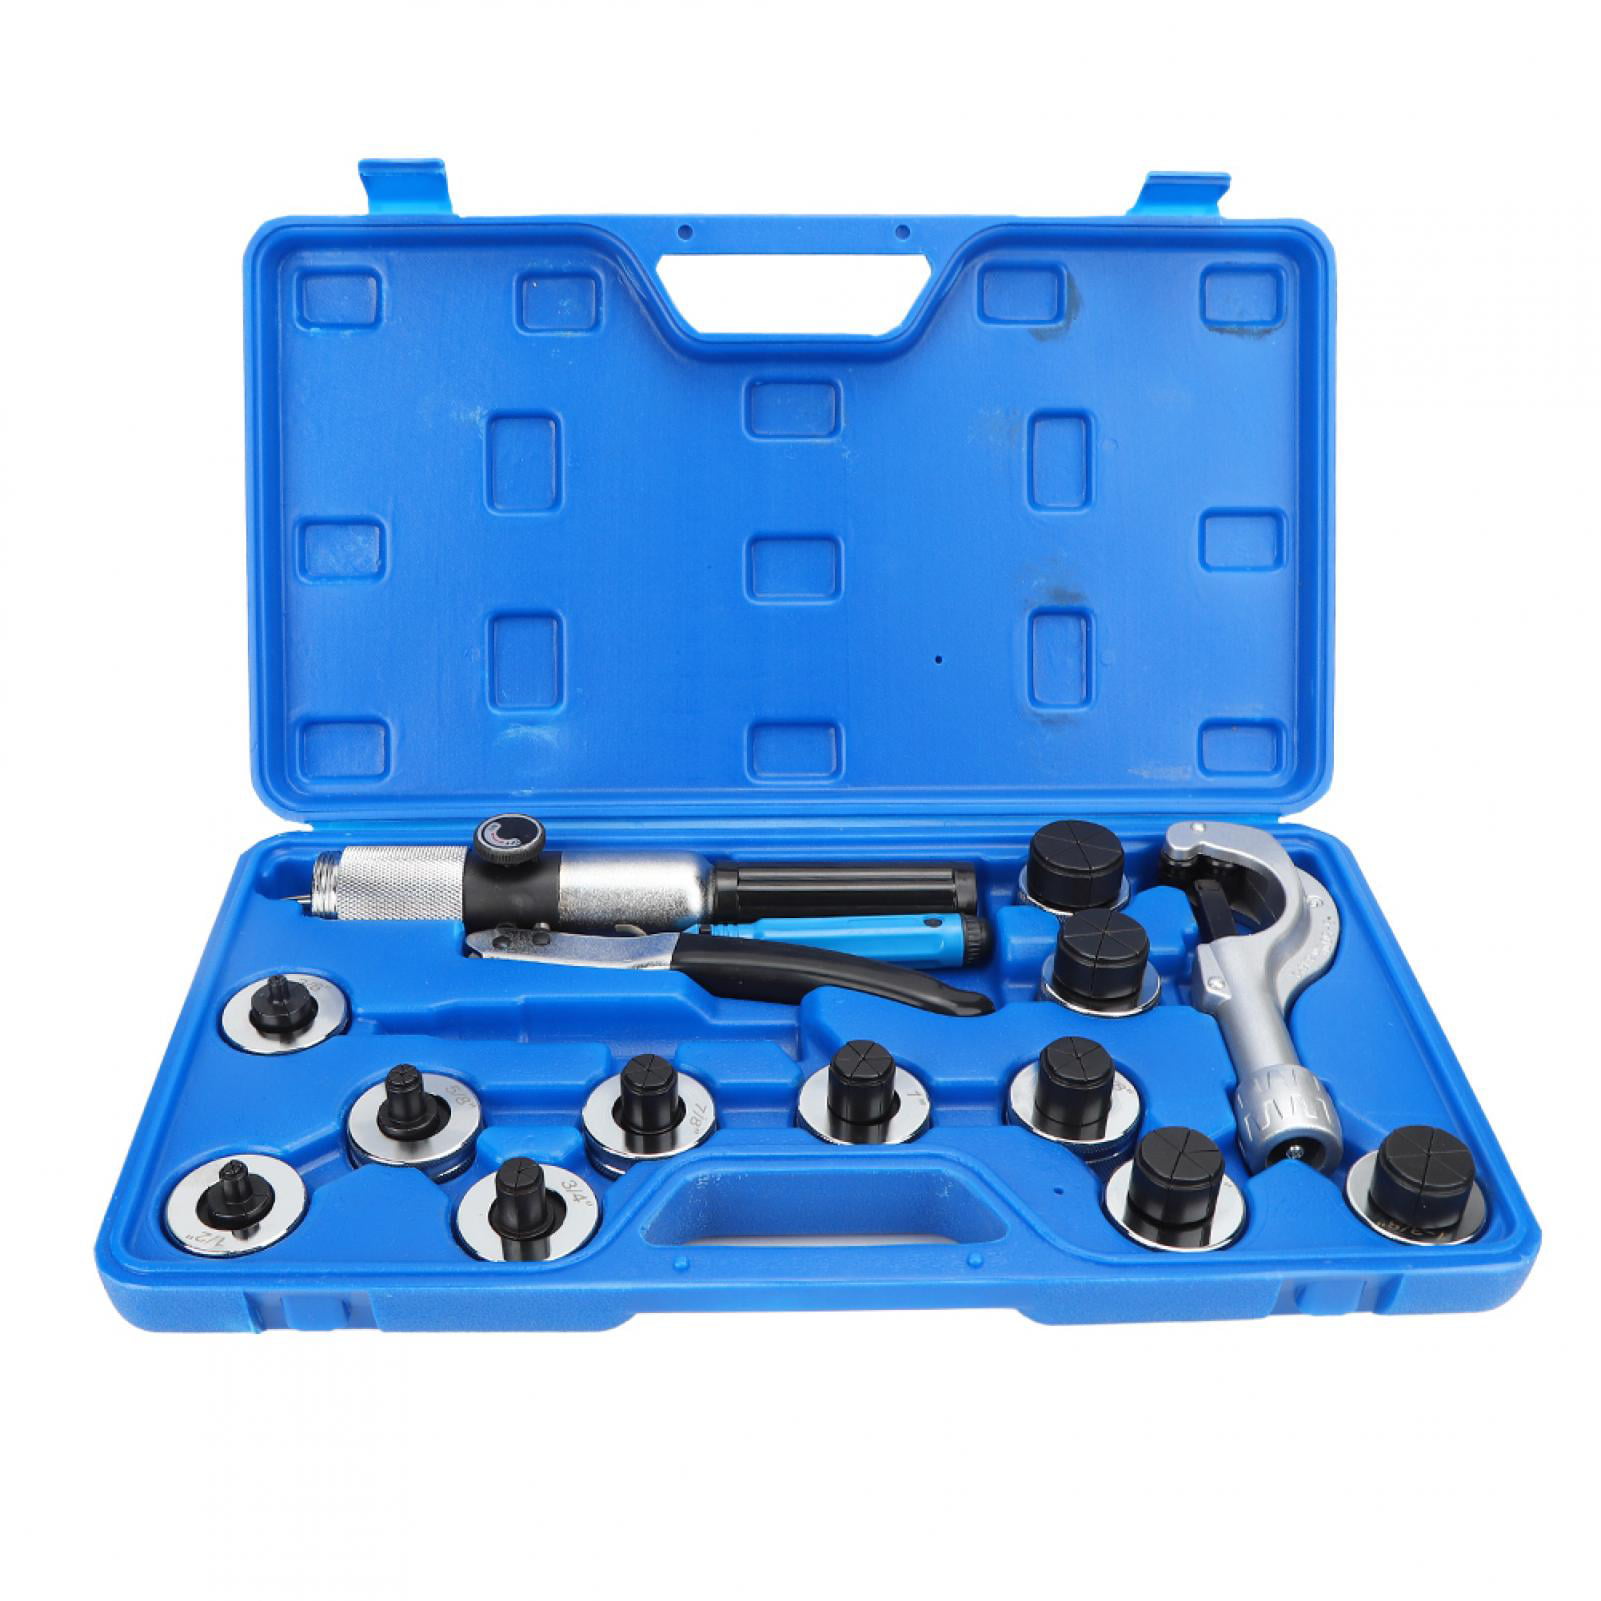 5-16mm Metric Inch Pipe Tube Flaring Tool Kit Expander Set.